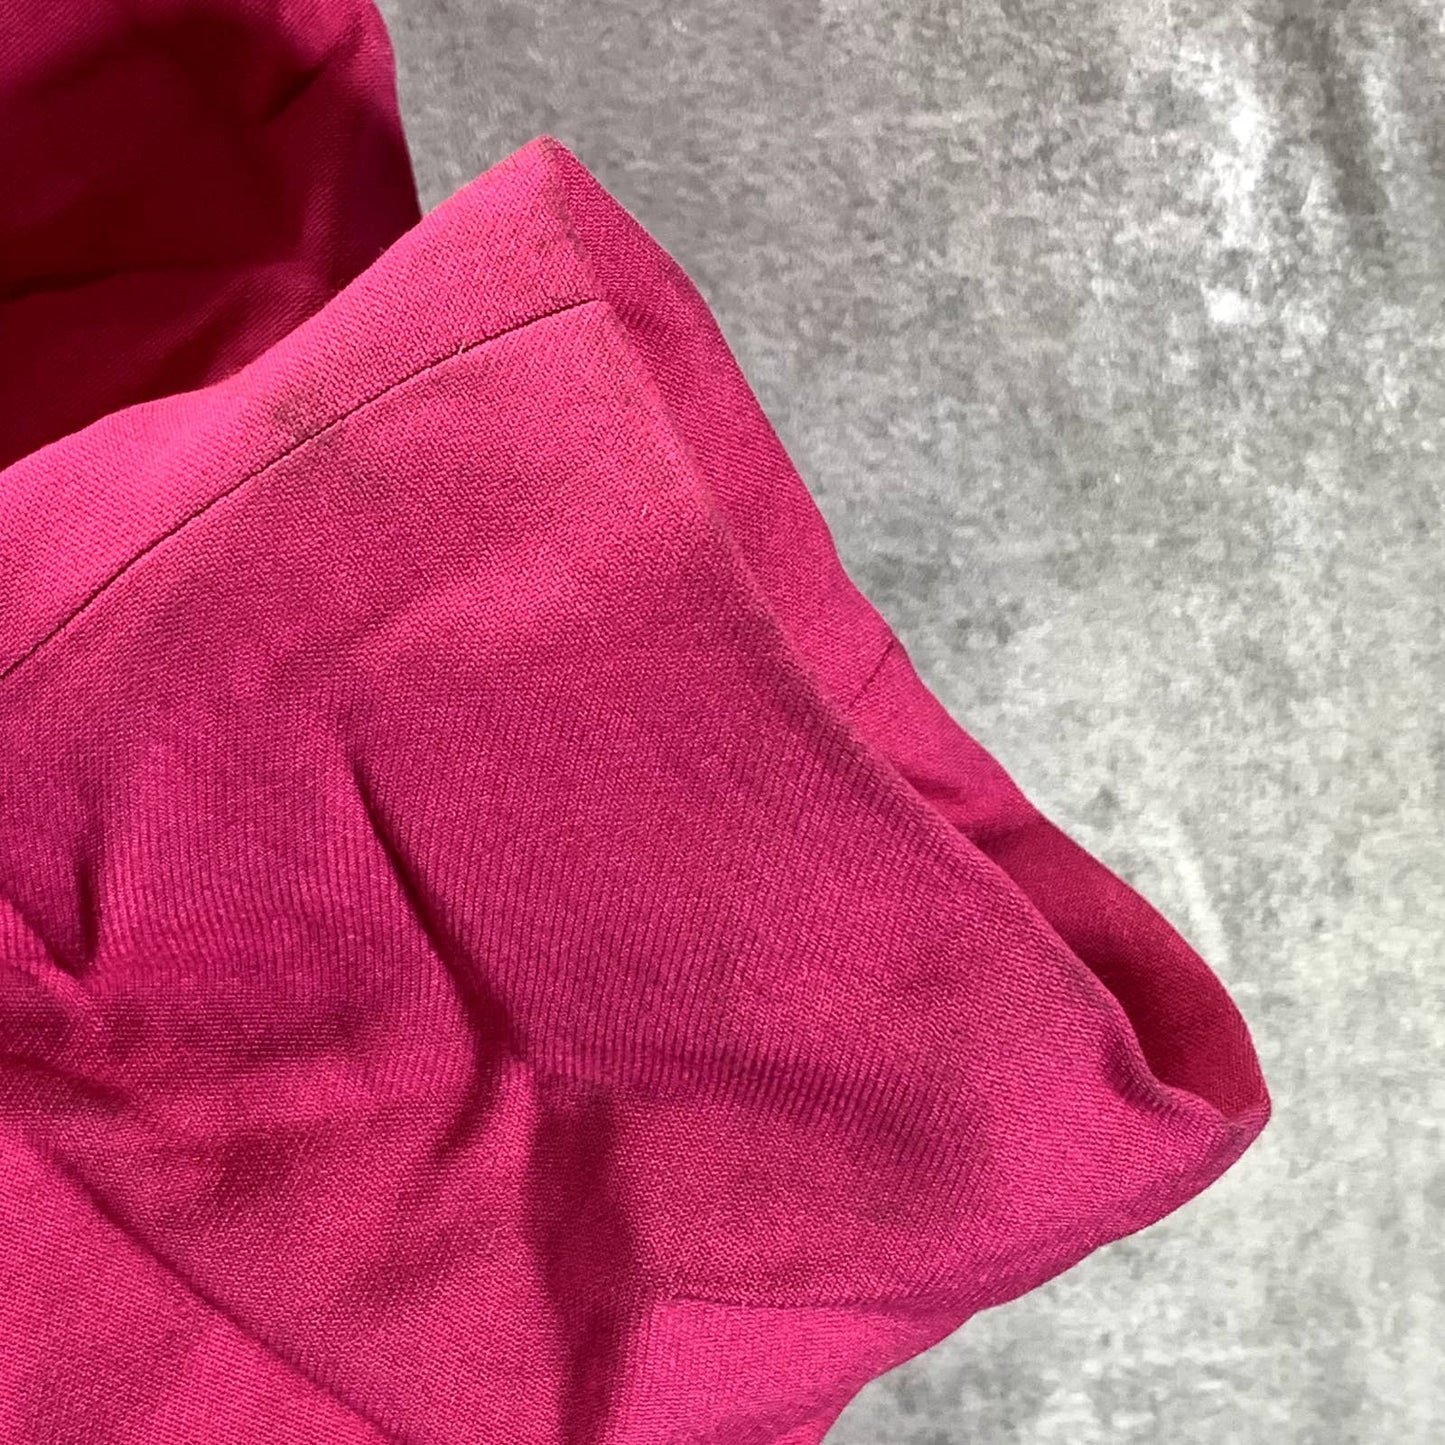 INC INTERNATIONAL CONCEPTS Women's Jazzy Pink One-Button Oversized Blazer SZ M